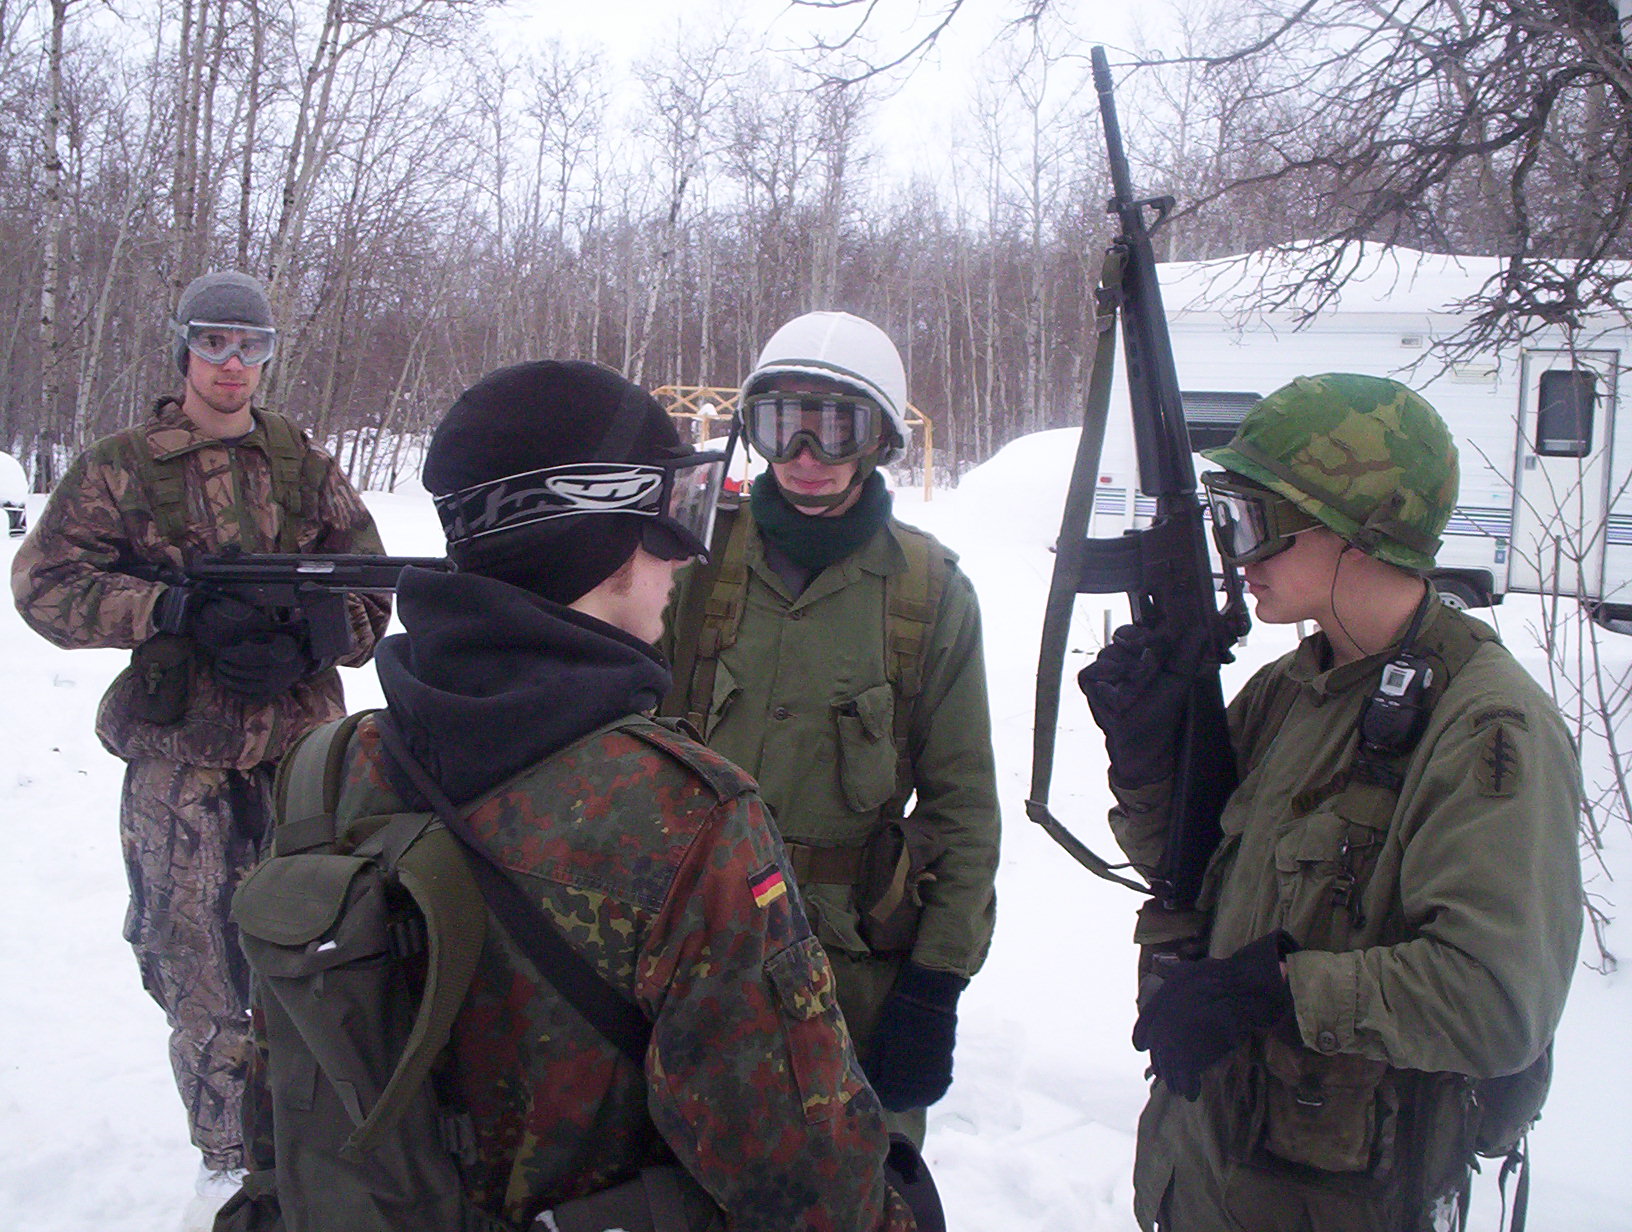 Feb. 8, 2004 Operation Snowblind Fox- left to right - Grasshopper, Heckler, Kevin, George